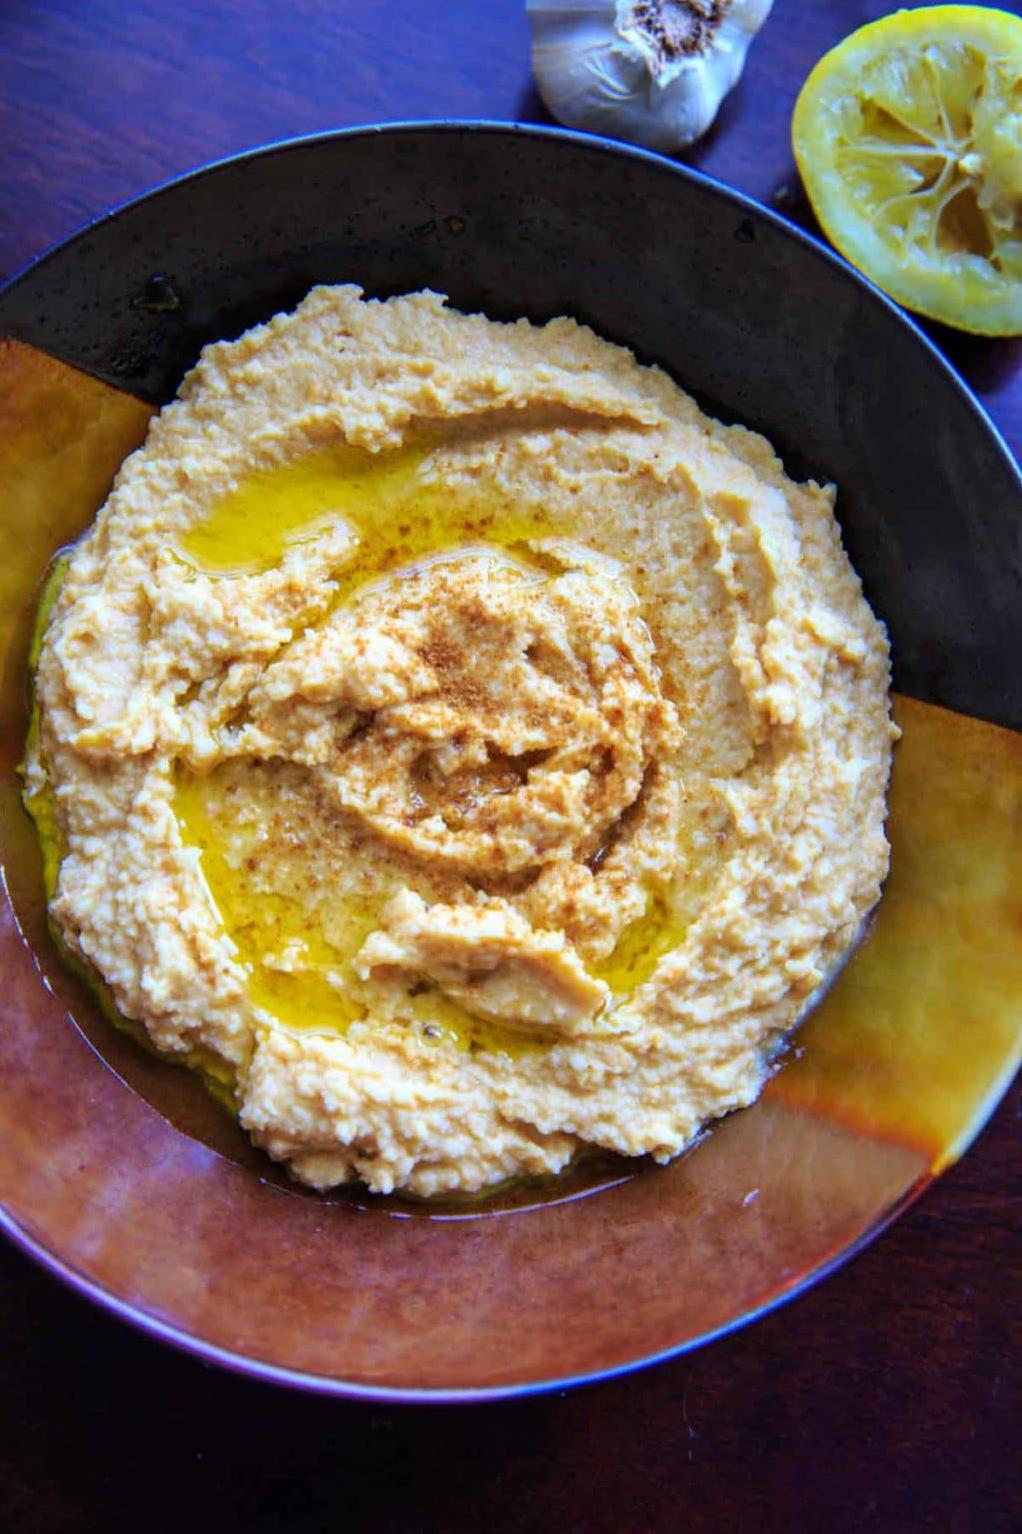  Here's a hummus recipe that's guaranteed to impress.